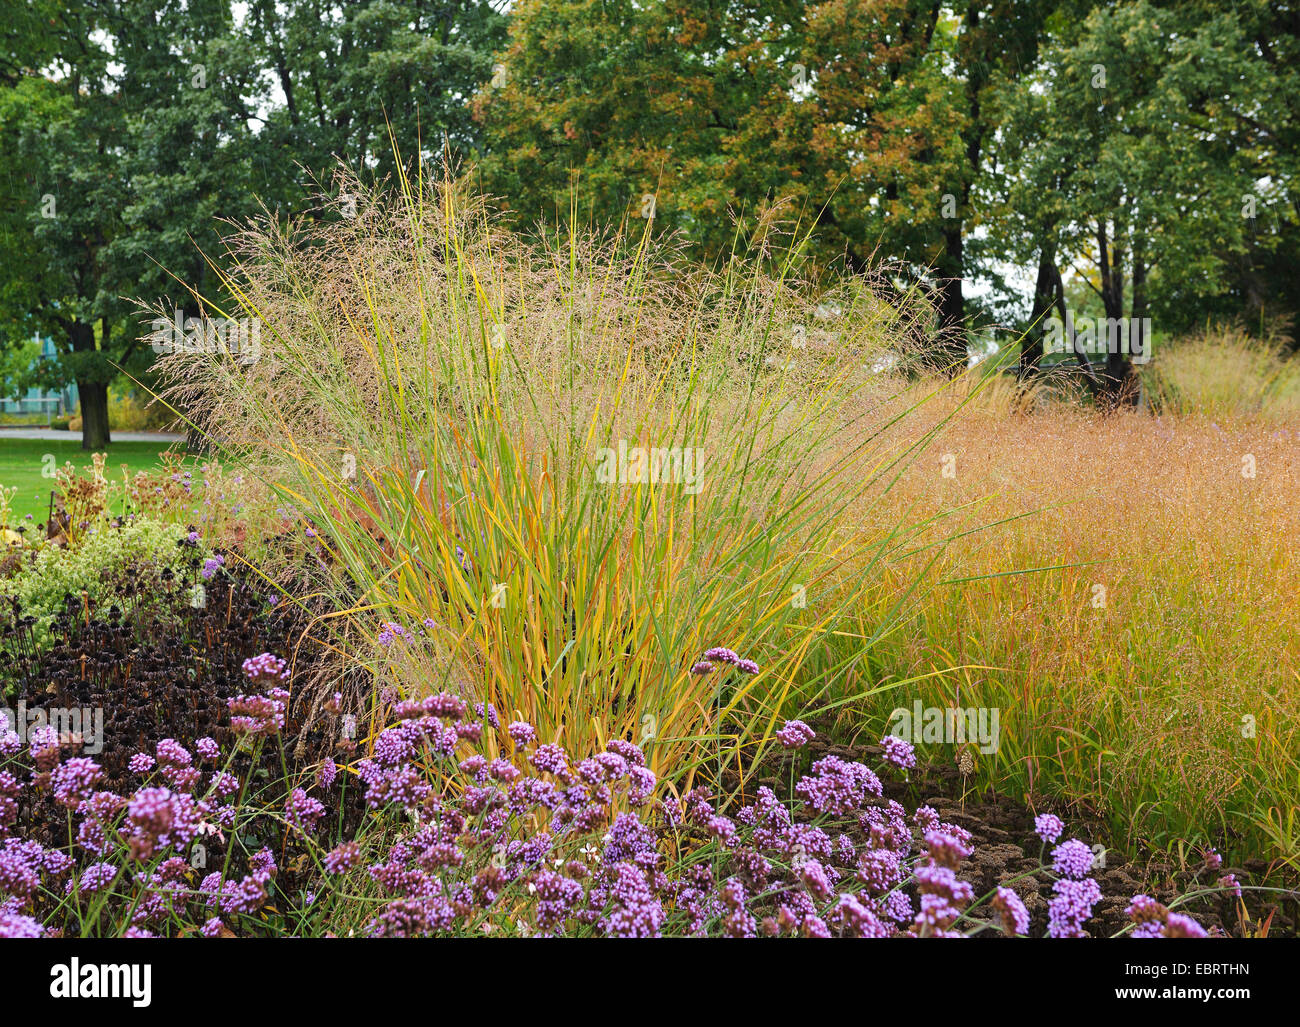 Old switch panic grass (Panicum virgatum 'Cloud Nine', Panicum virgatum Cloud Nine), blooming Stock Photo